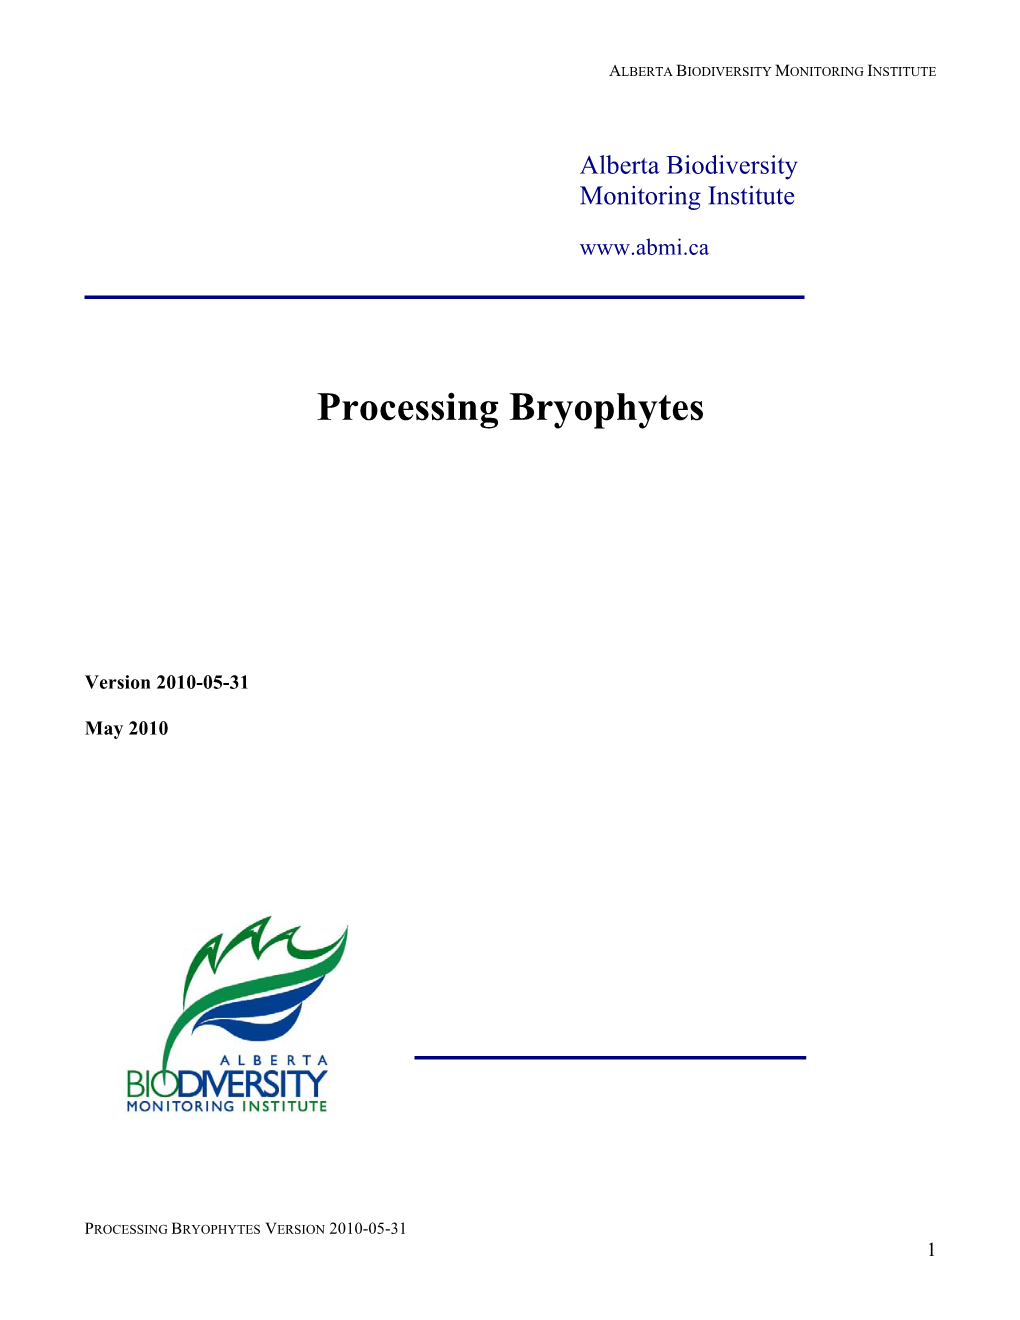 Processing Bryophytes